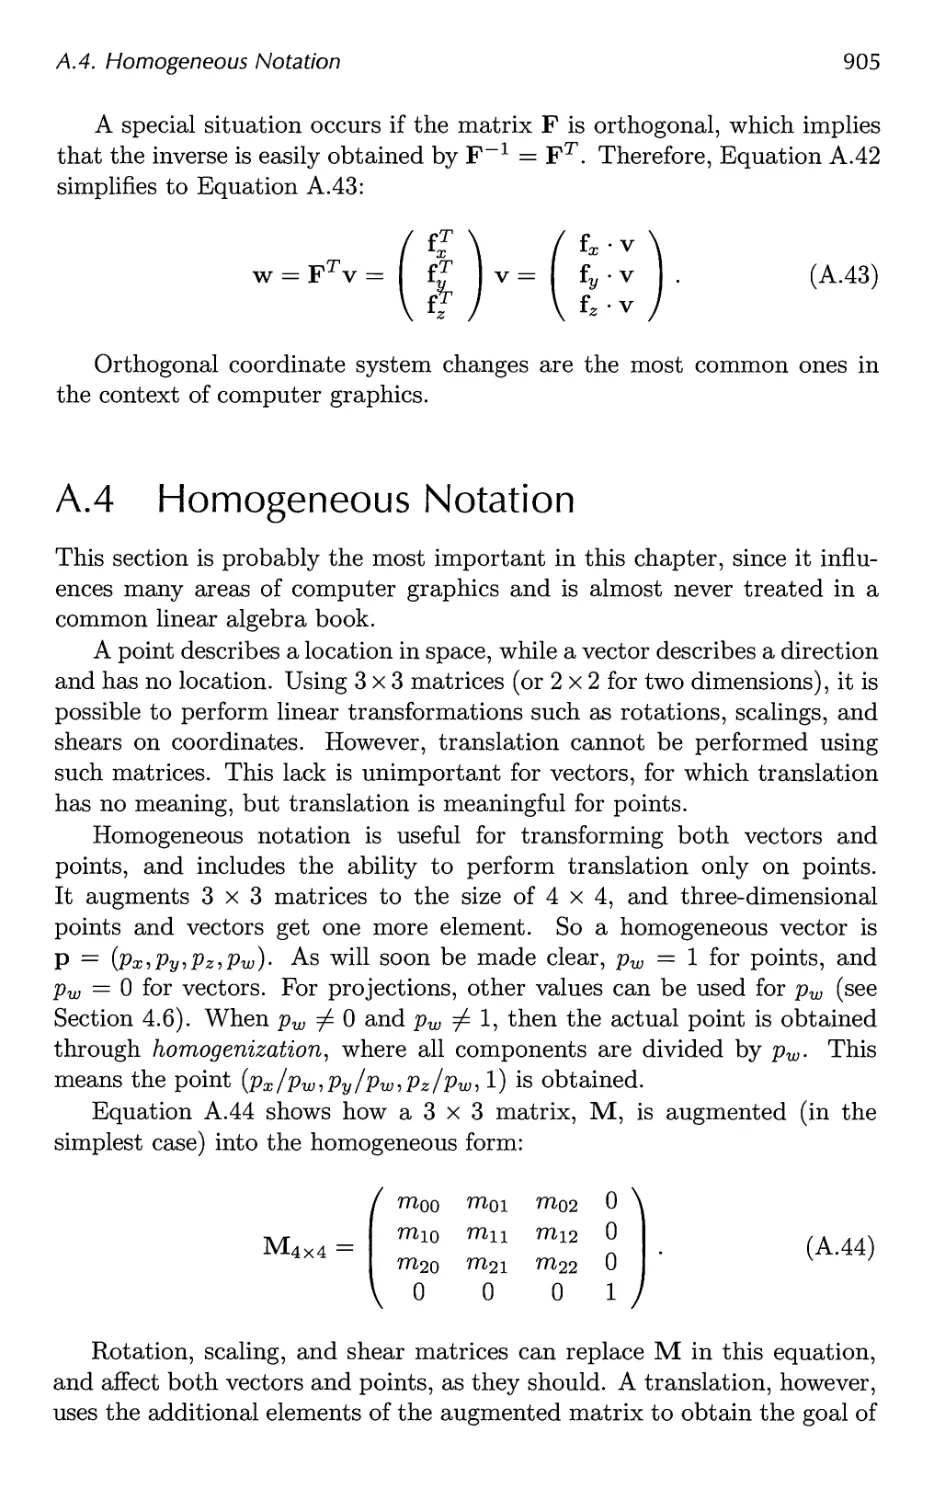 A.4 Homogeneous Notation